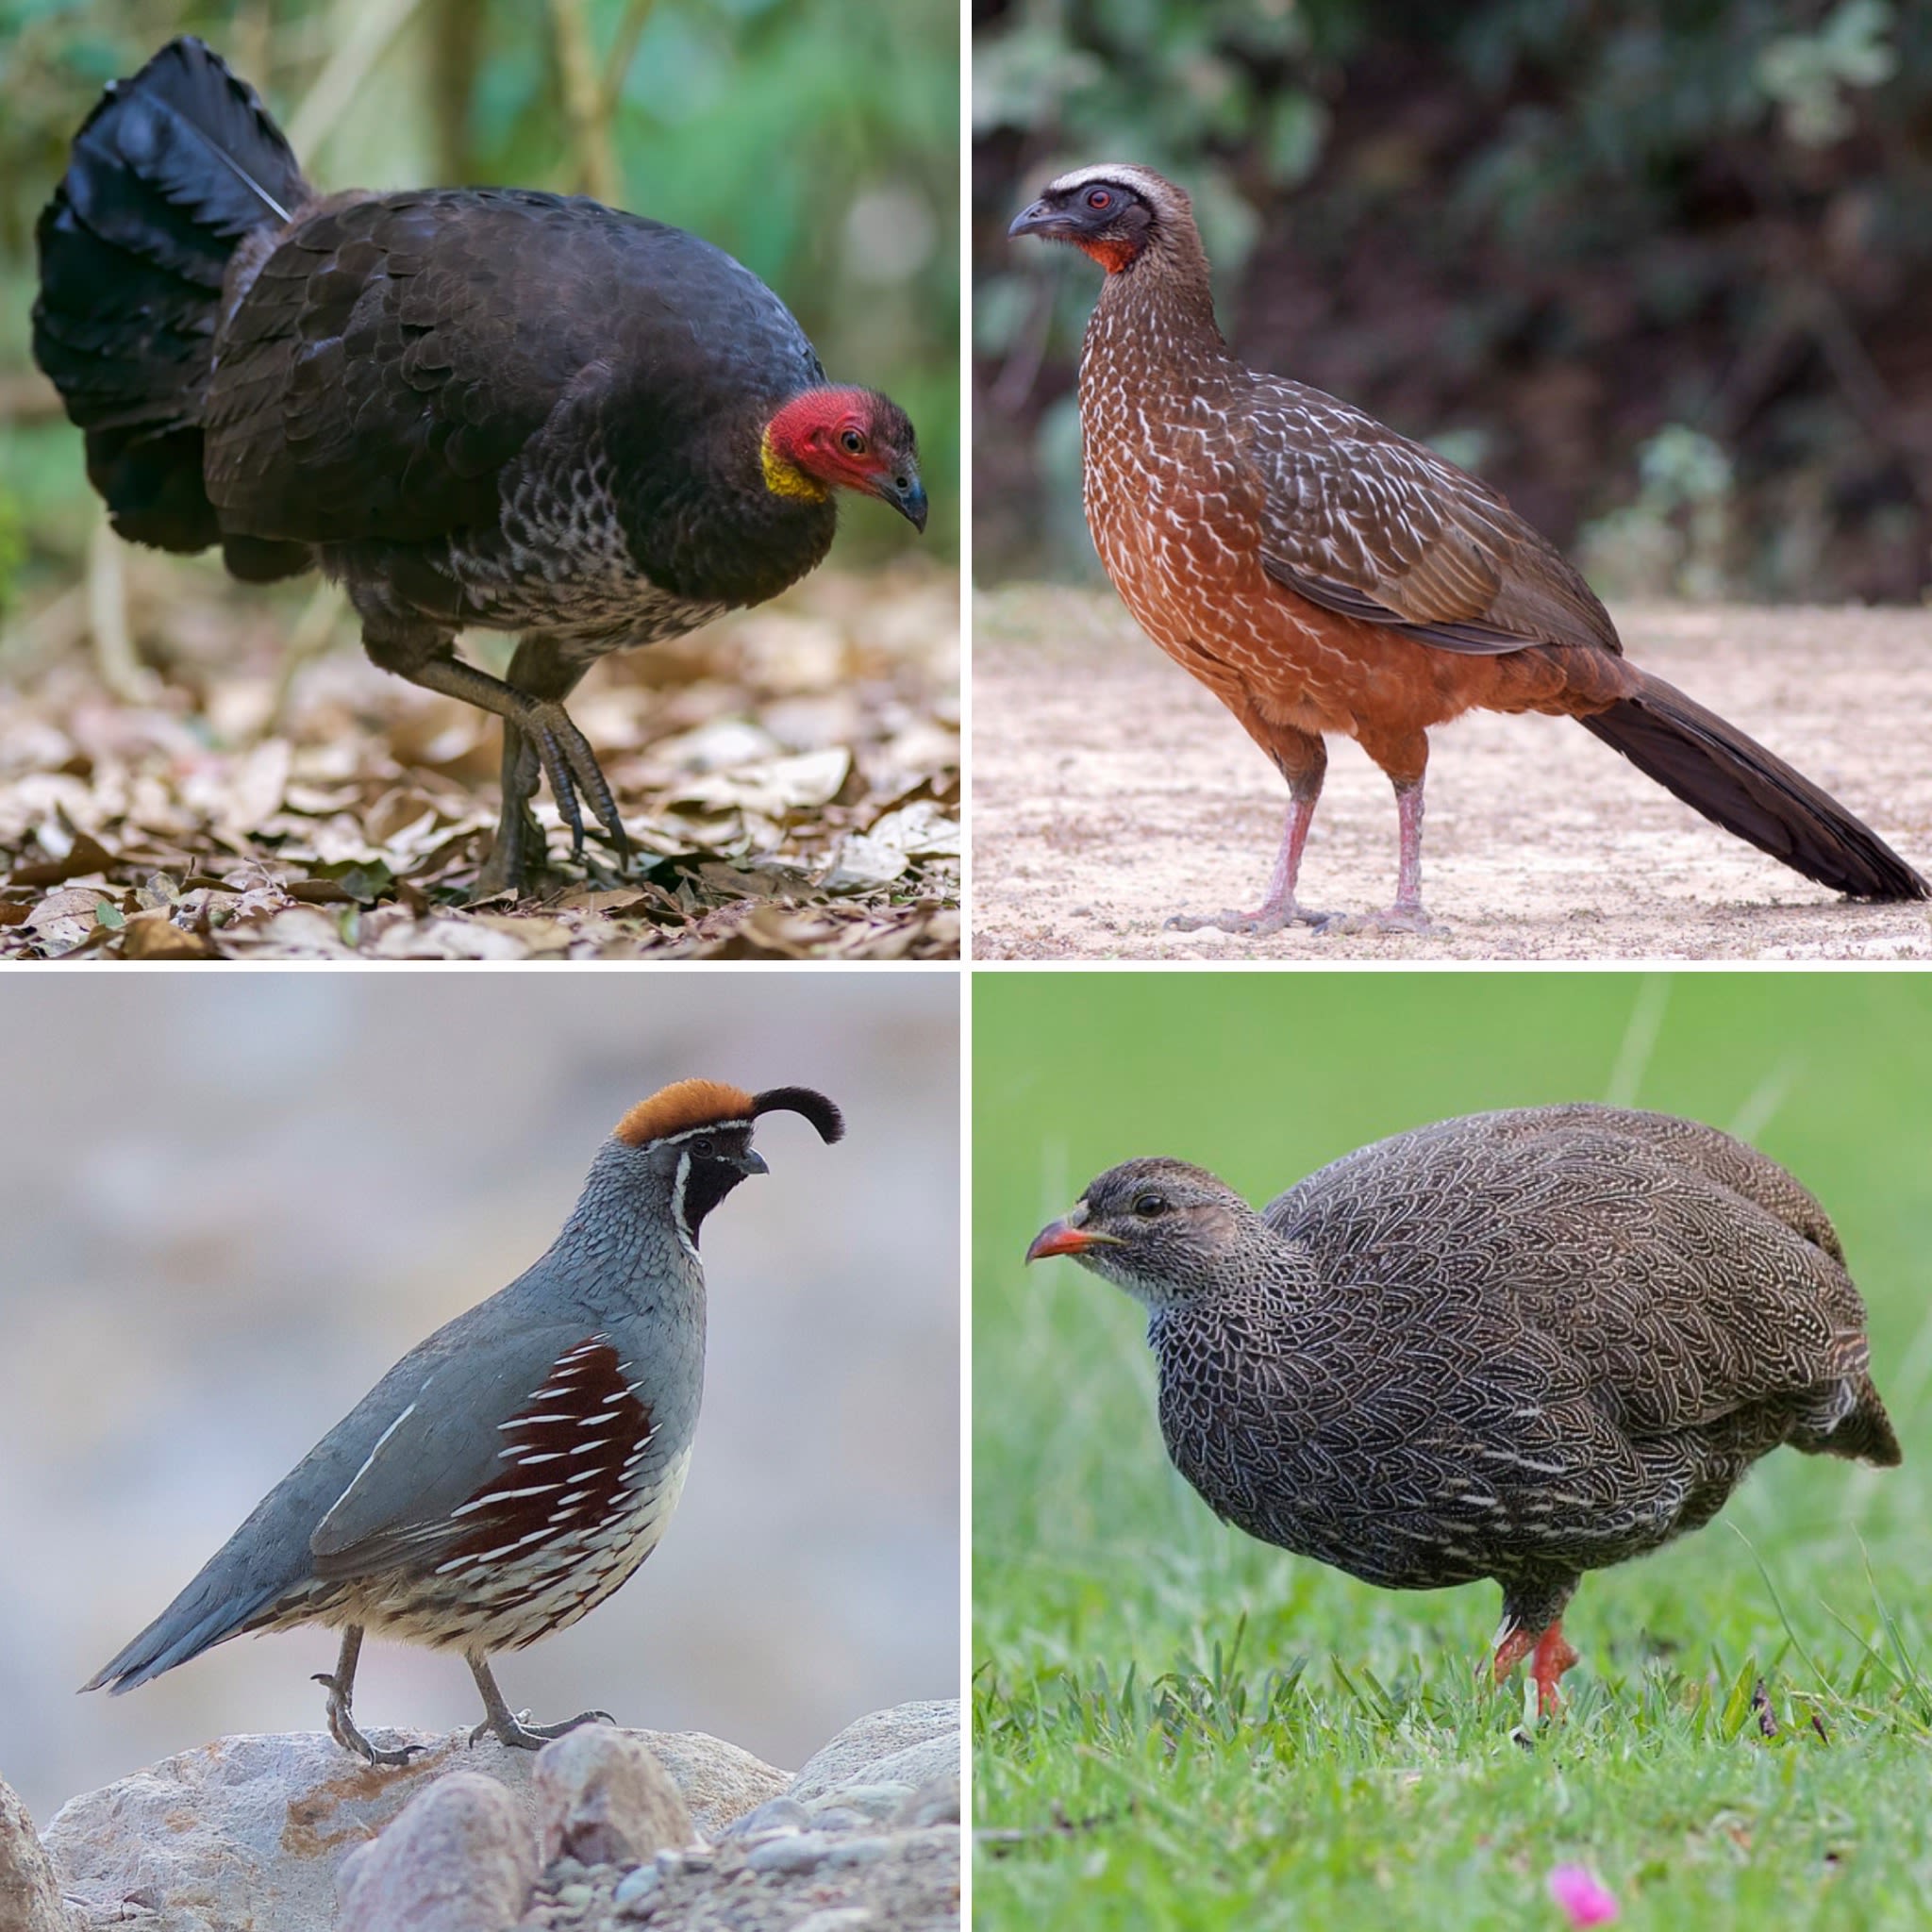 Examples of modern chicken-like birds